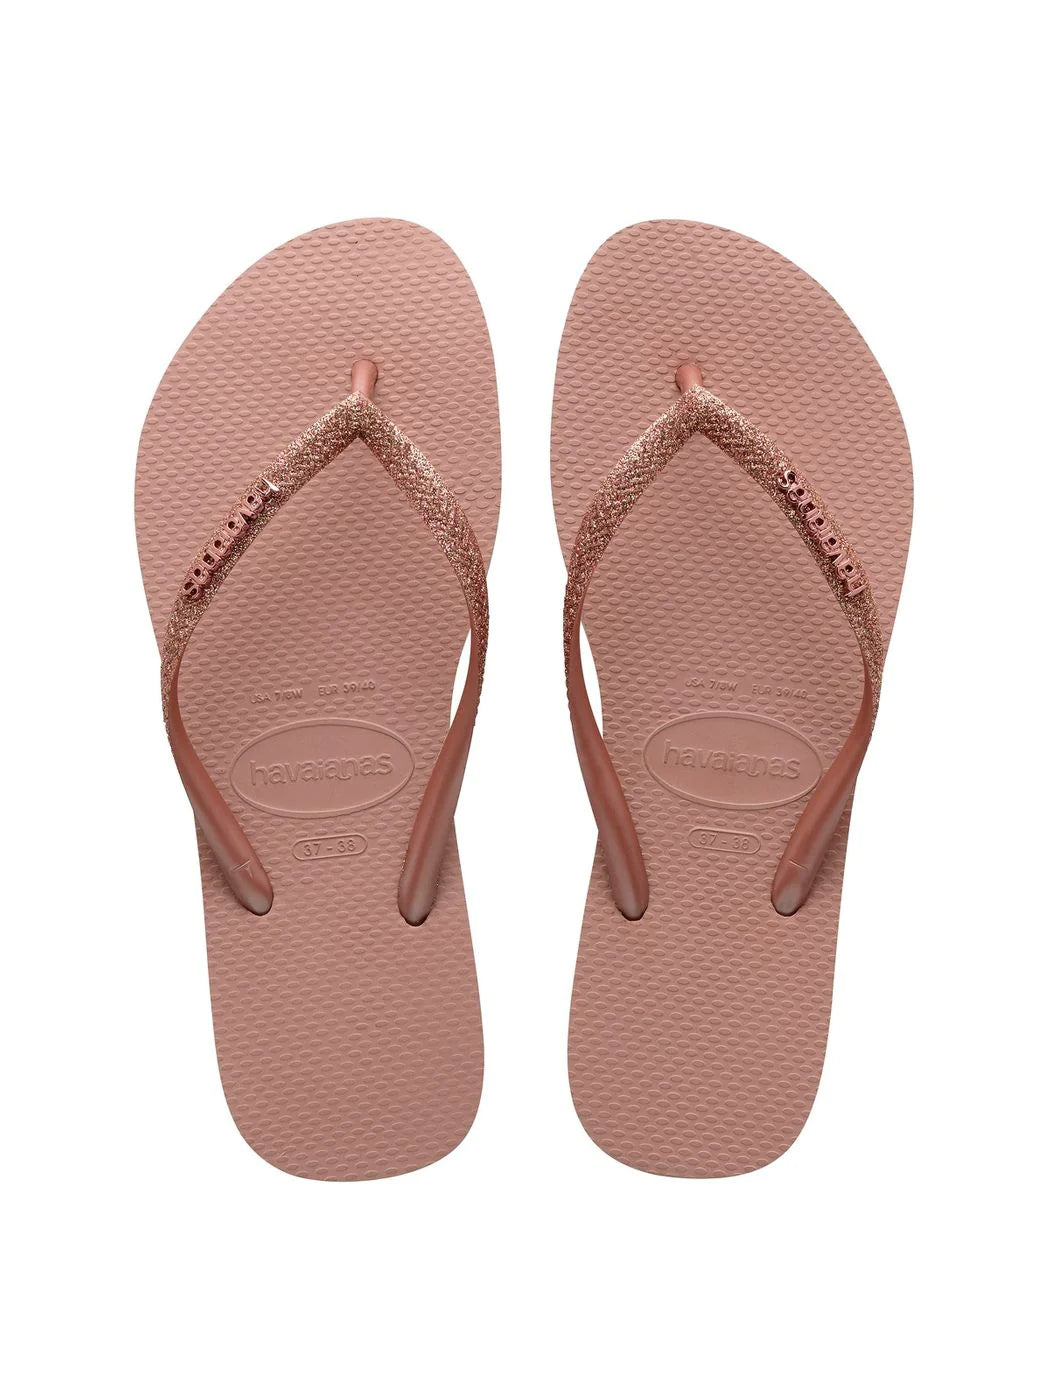 Havaianas Slim Glitter flip-flop papucs, rózsaszín - MYBRANDS.HU